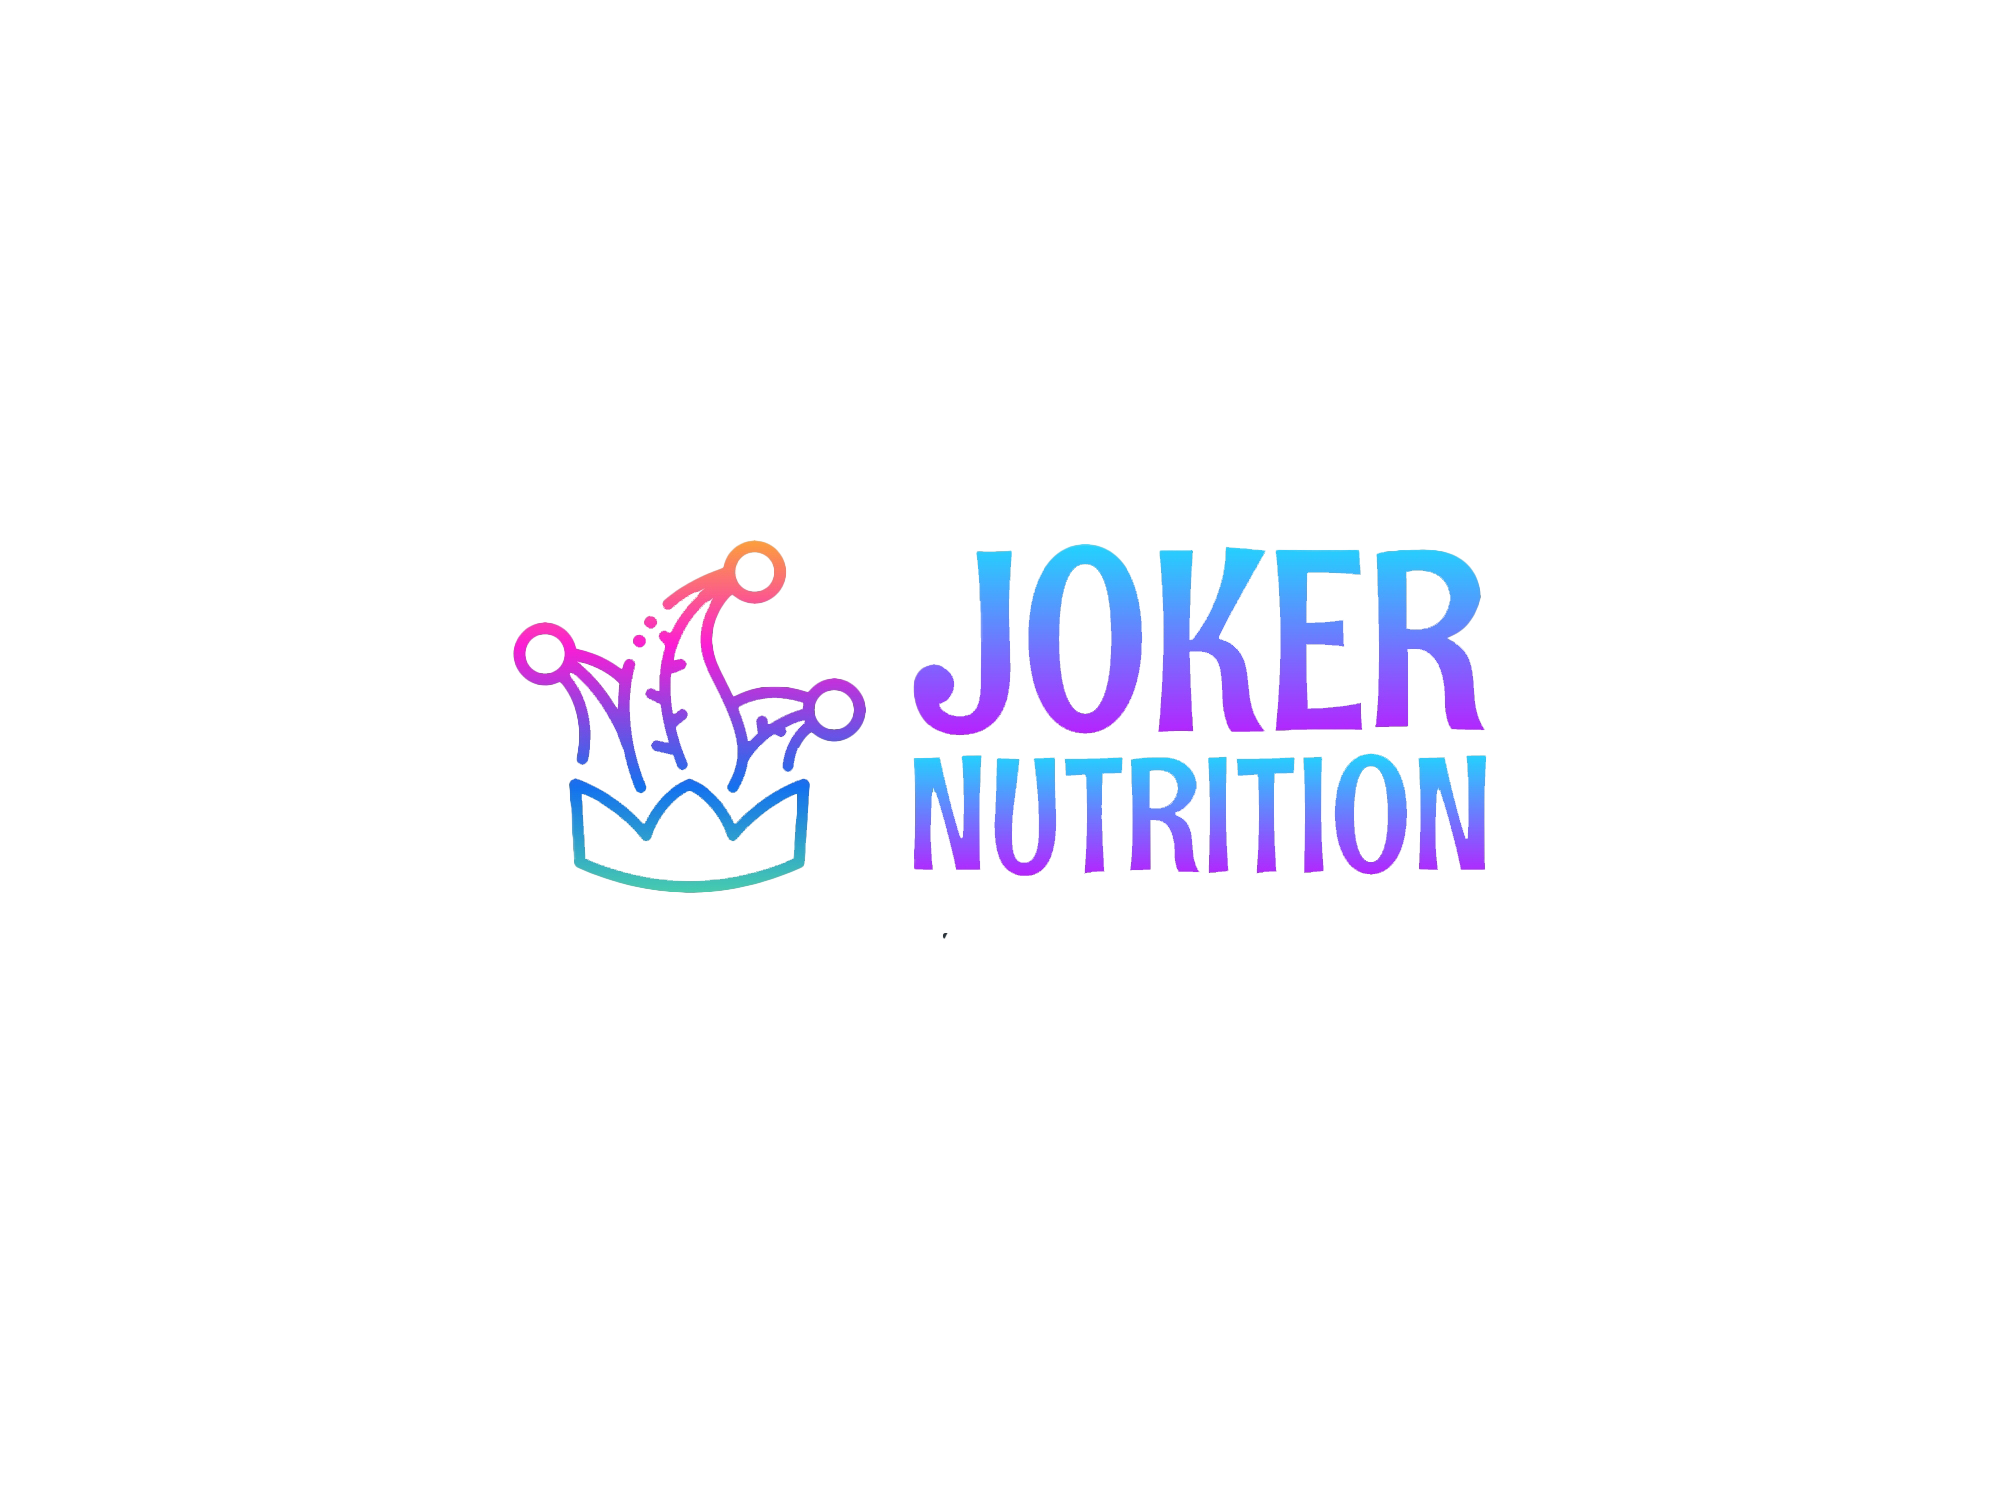 JOKER NUTRITION